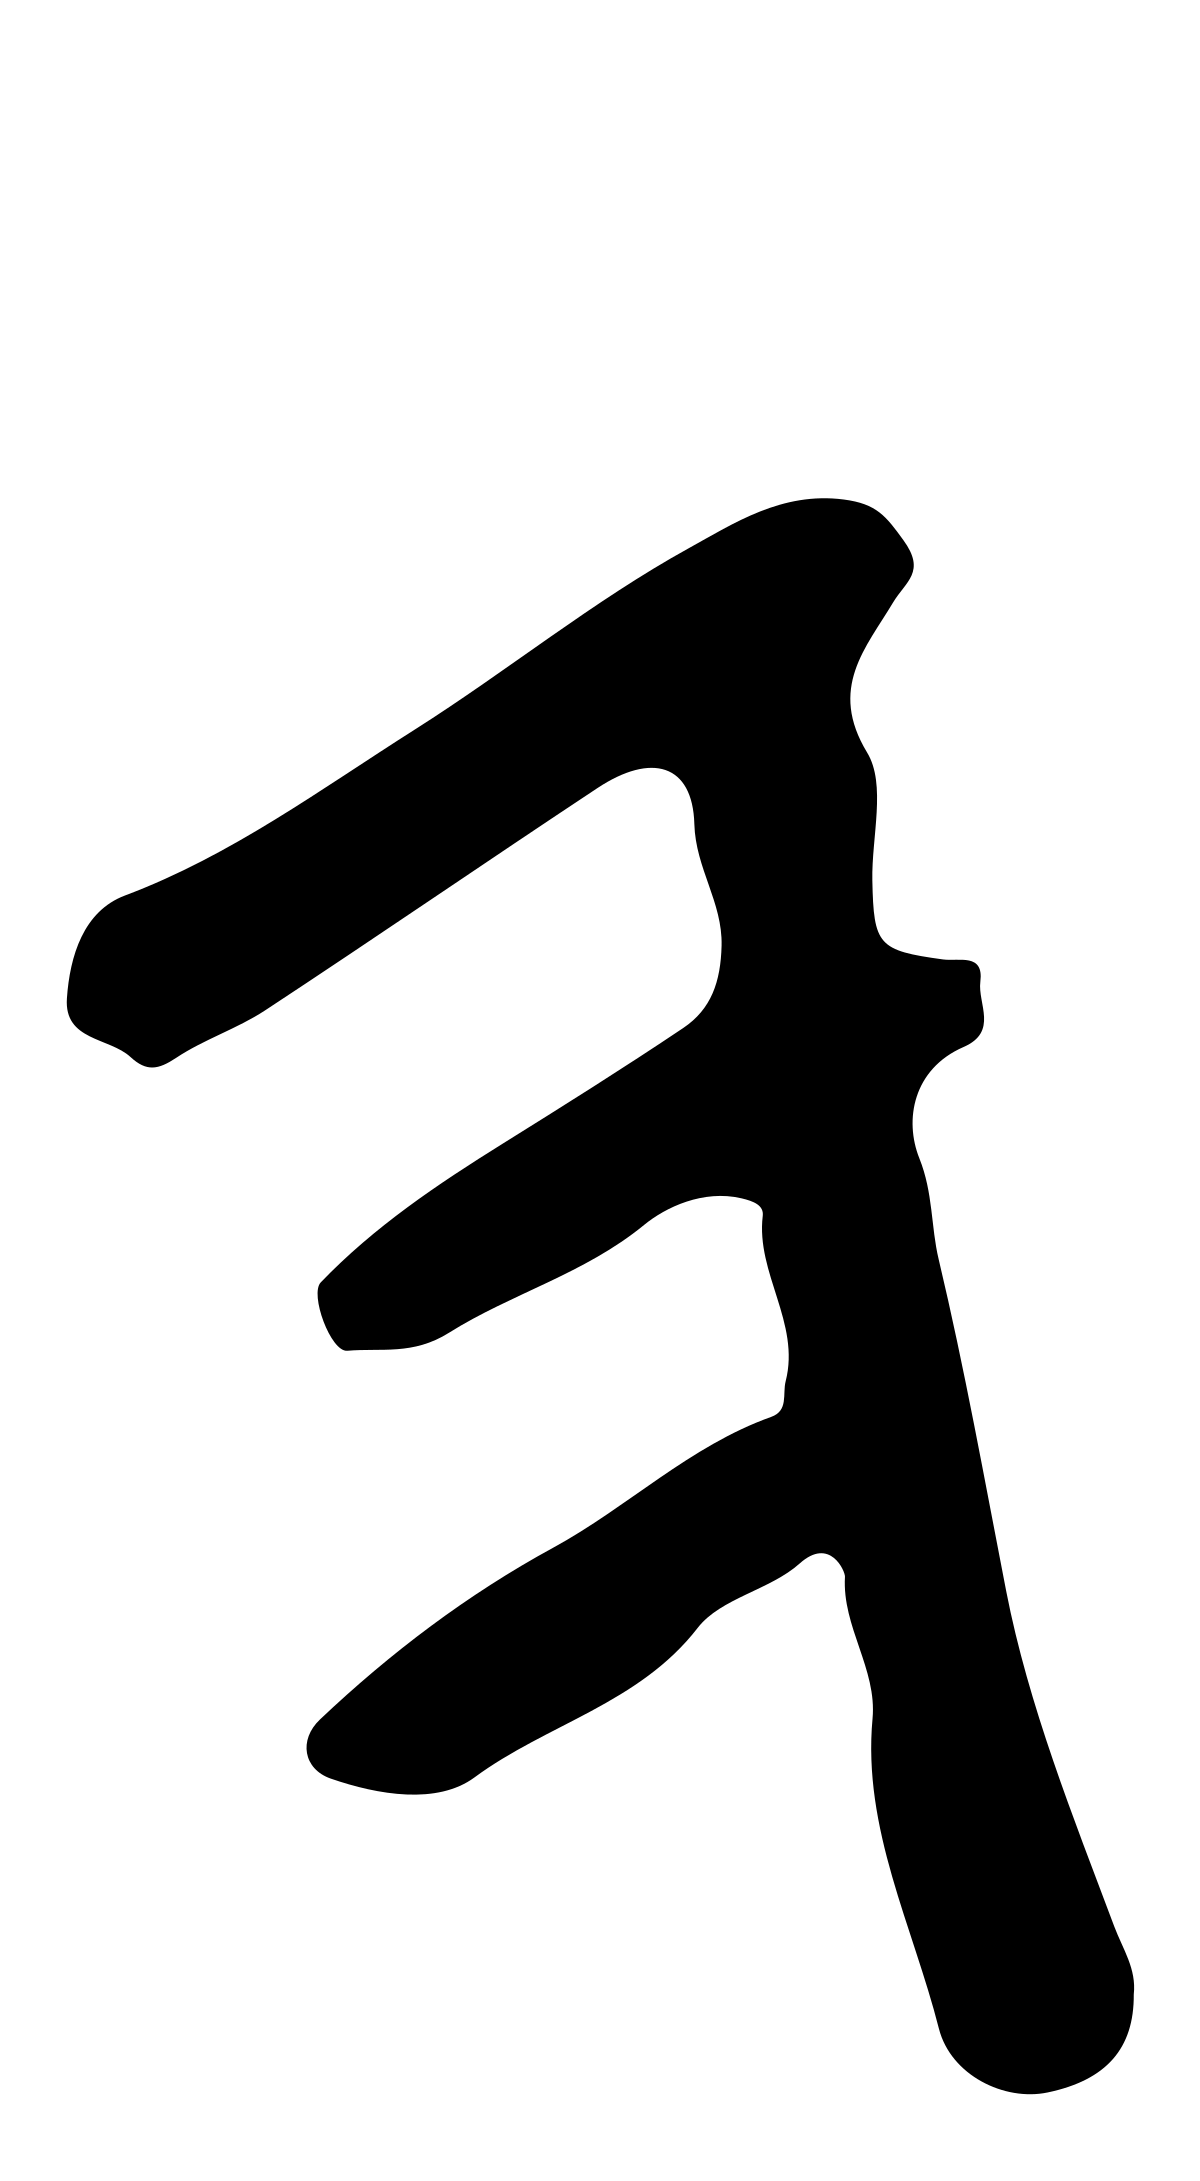 Paleo-Hebrew alphabet - Wikipedia